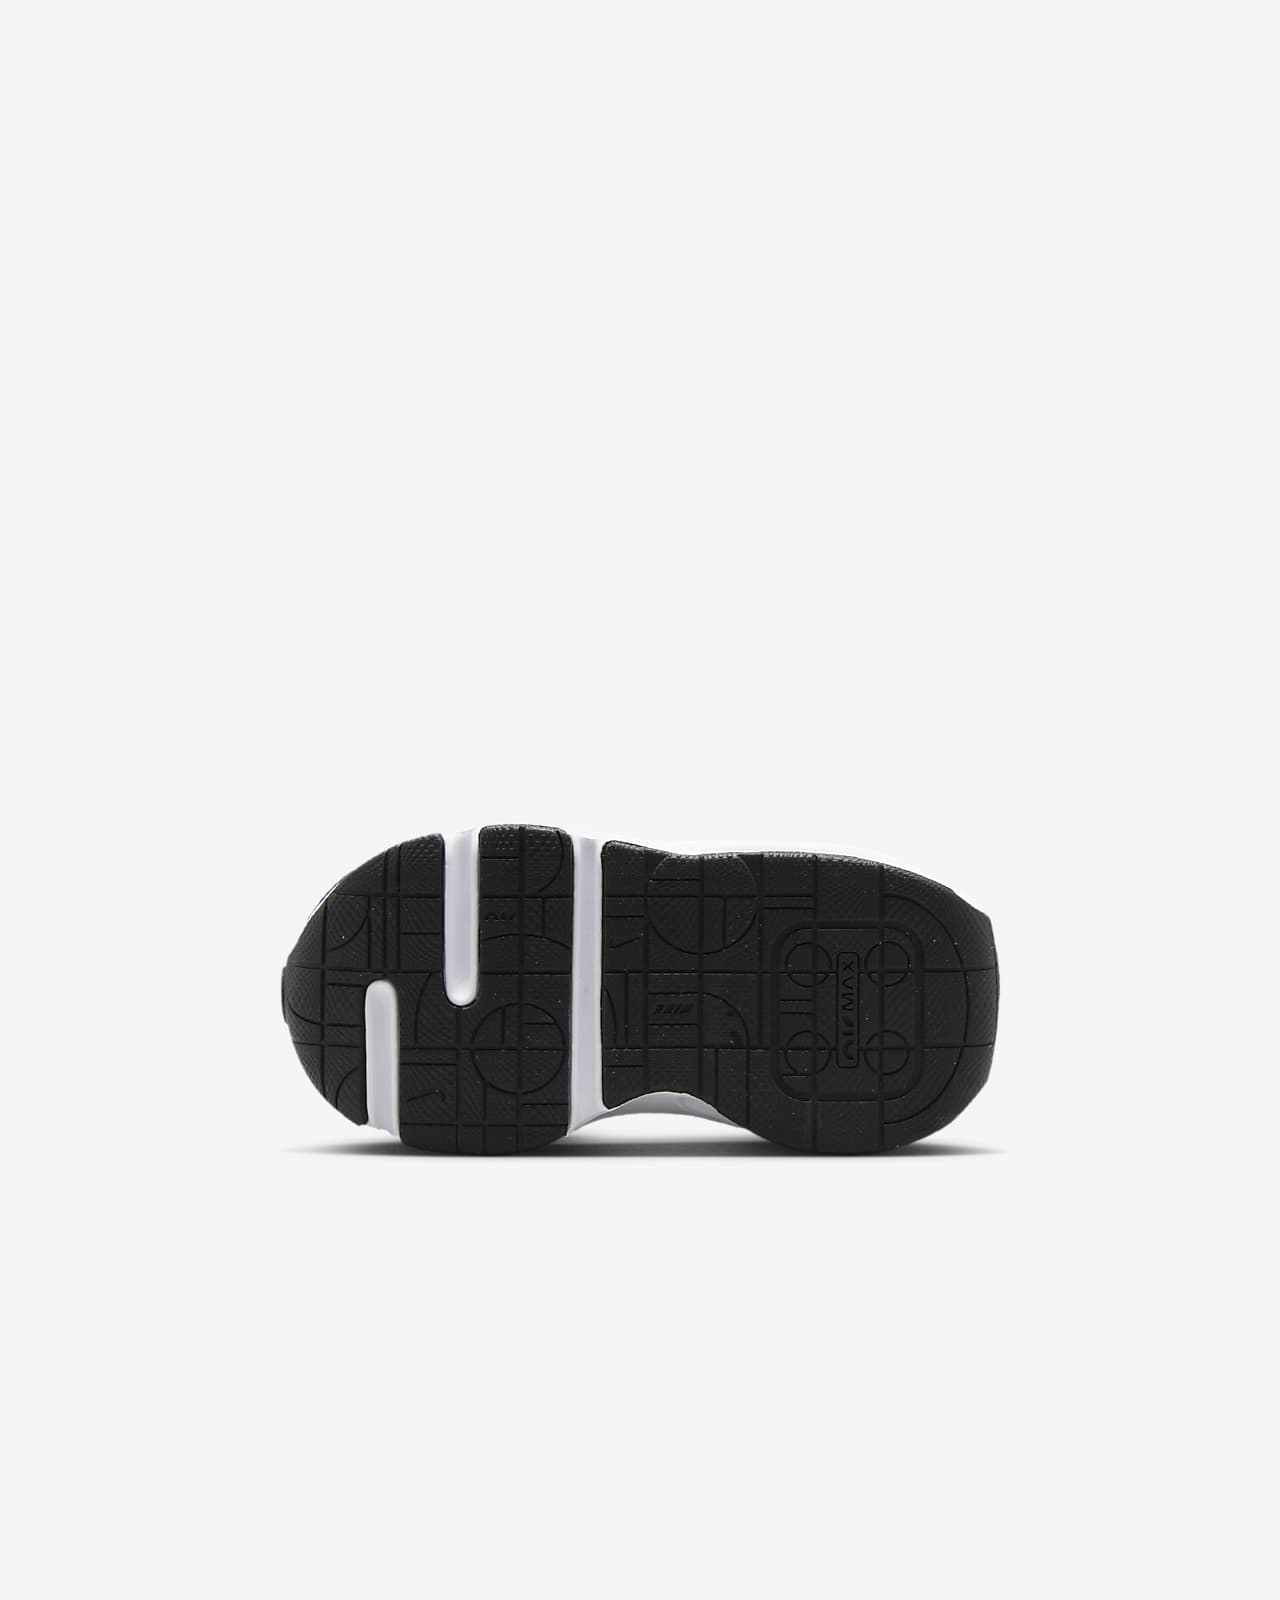 Lite Nike INTRLK Shoes. Max Baby/Toddler Air